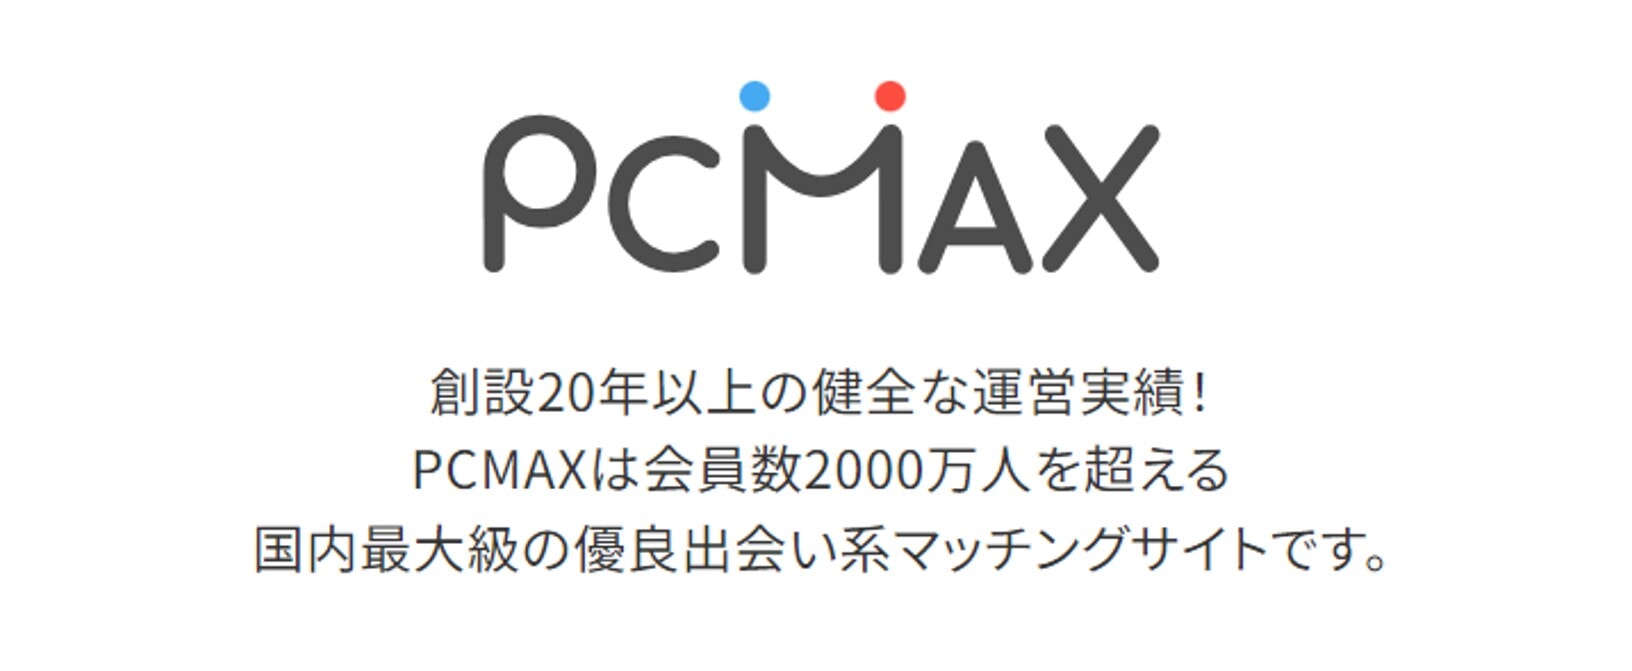 pcmaxは会員数2,000万を超える出会い系マッチングサイト